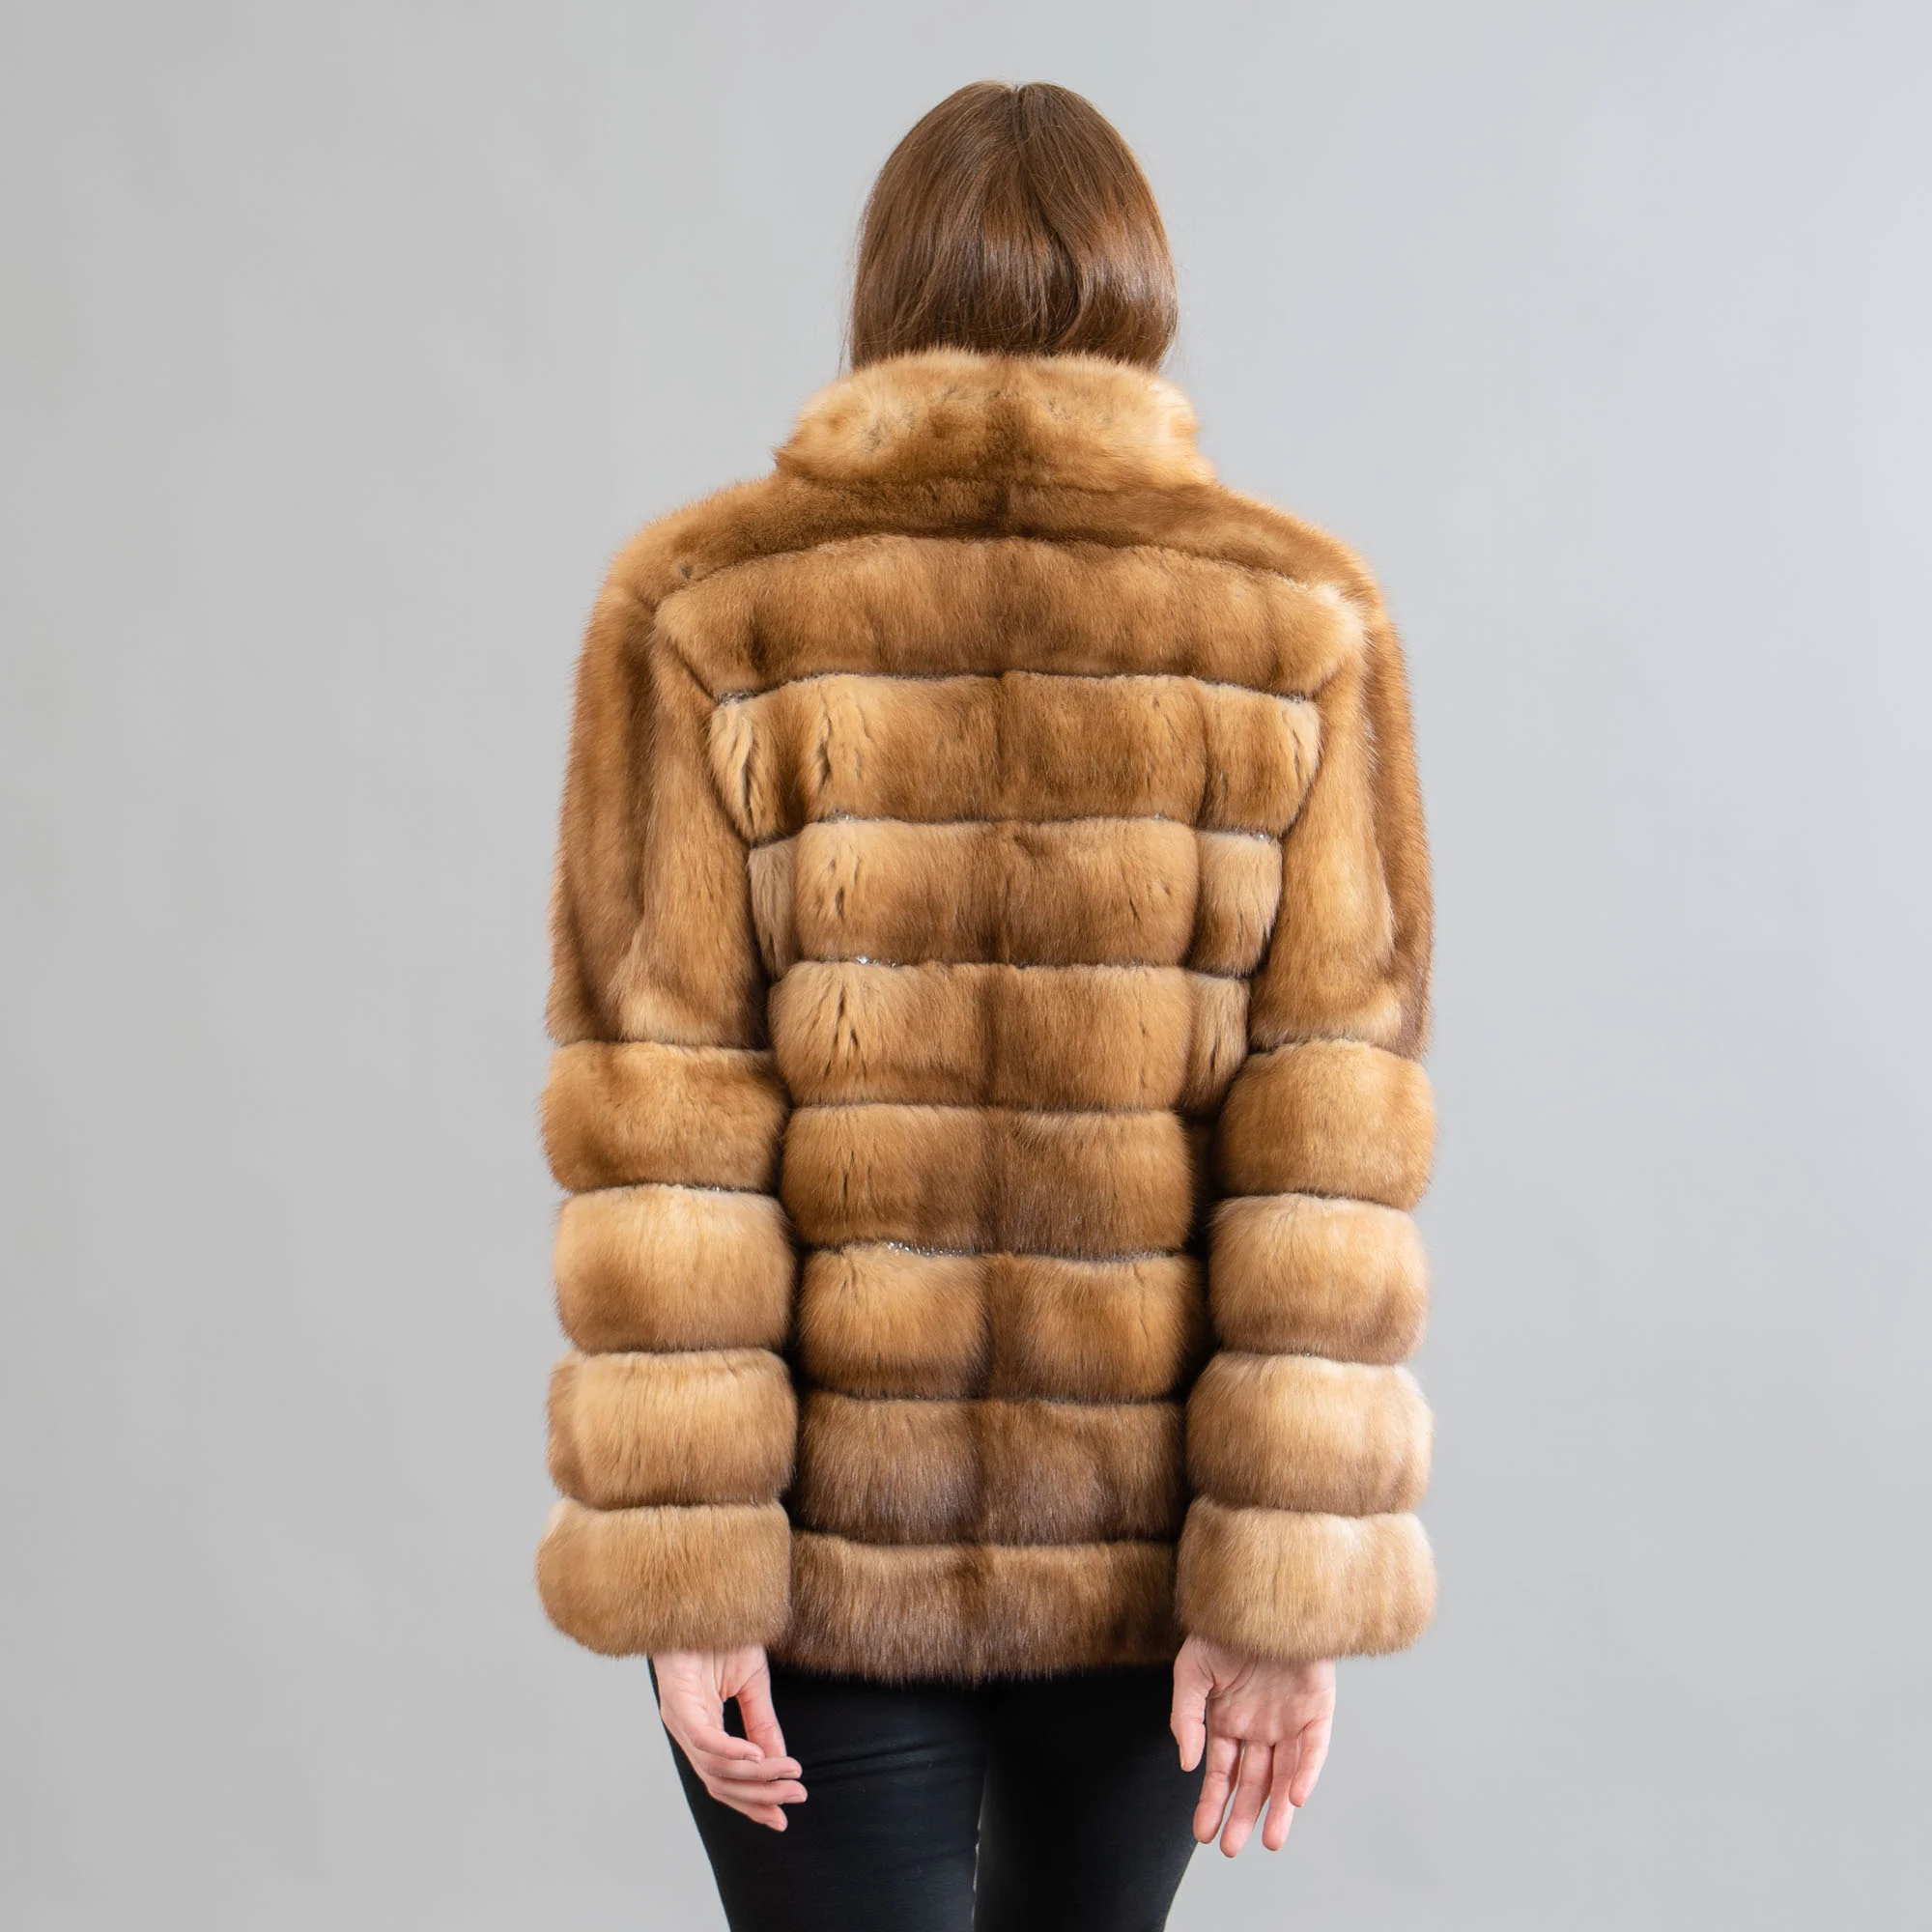 Sable fur jacket in gold color. 